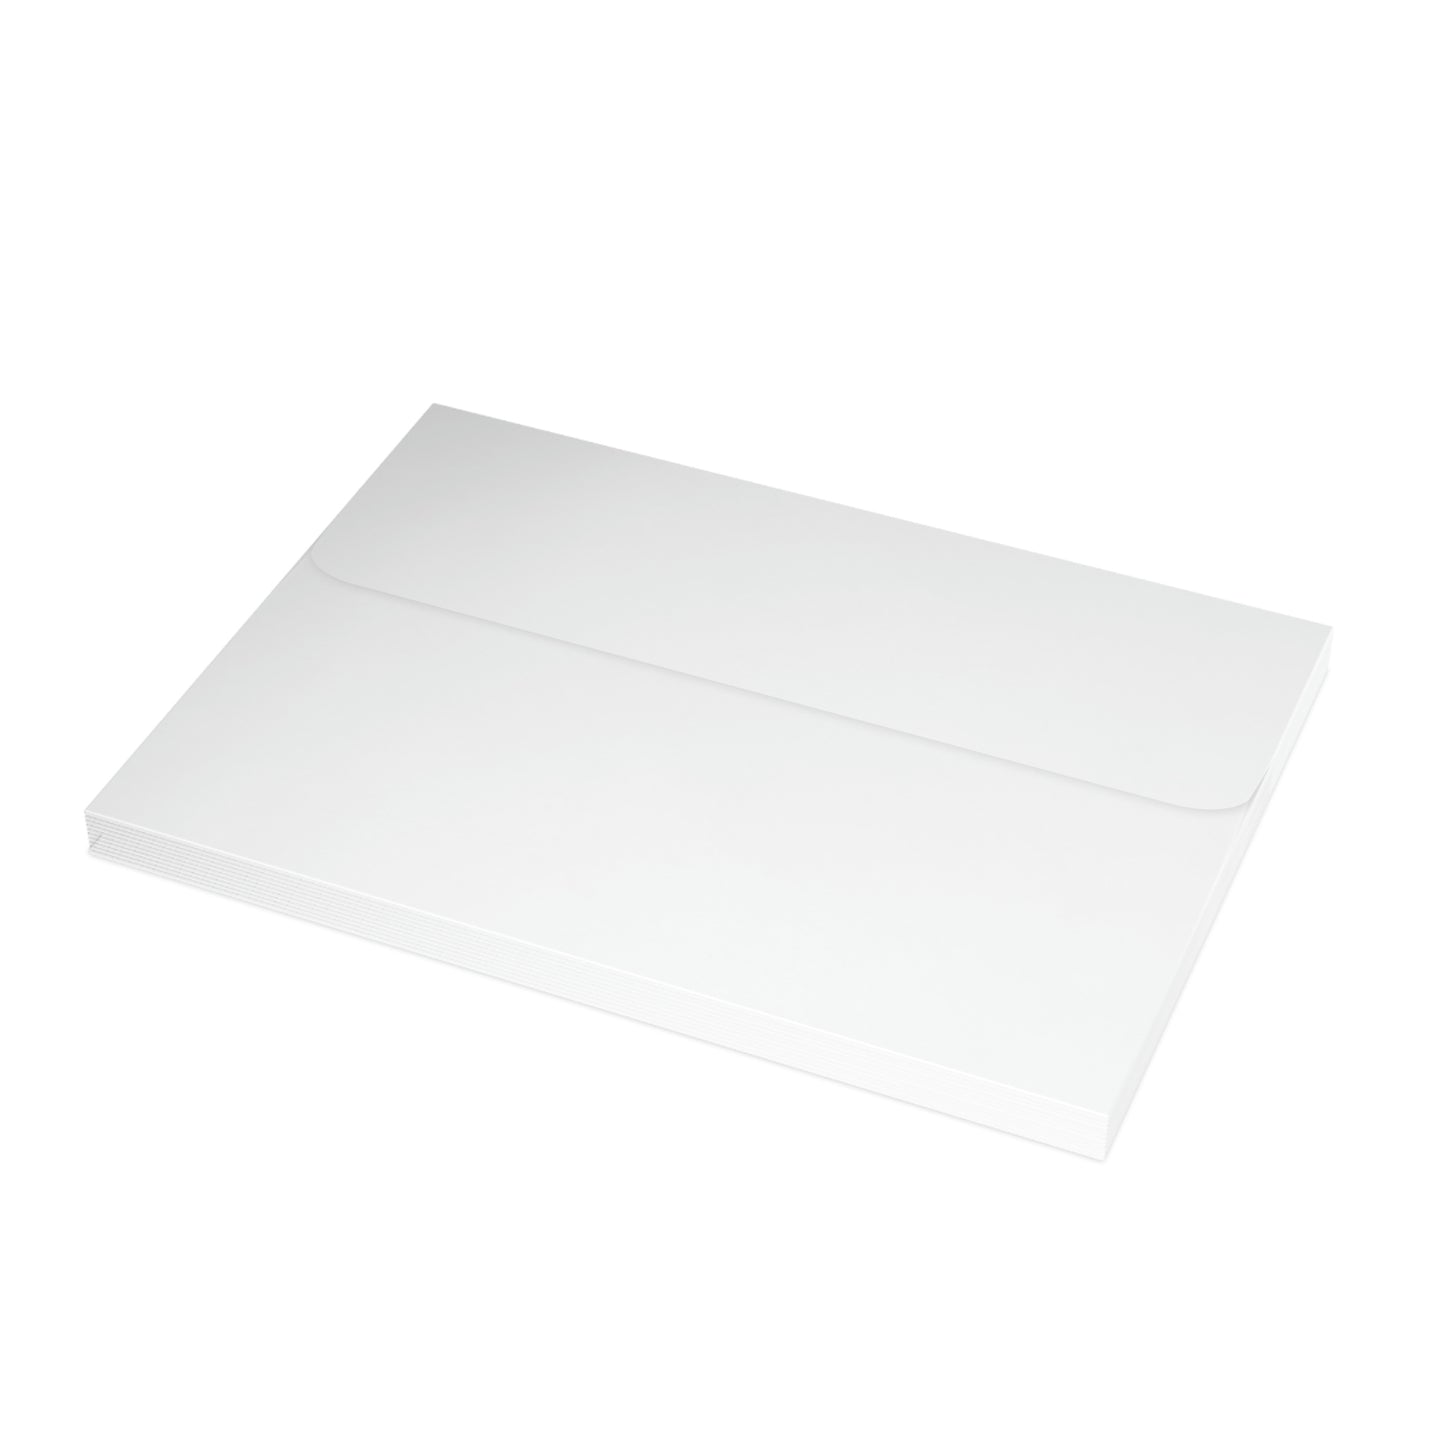 Folded Greeting Cards Horizontal (1, 10, 30, and 50pcs) Happy Birthday - Design No.300